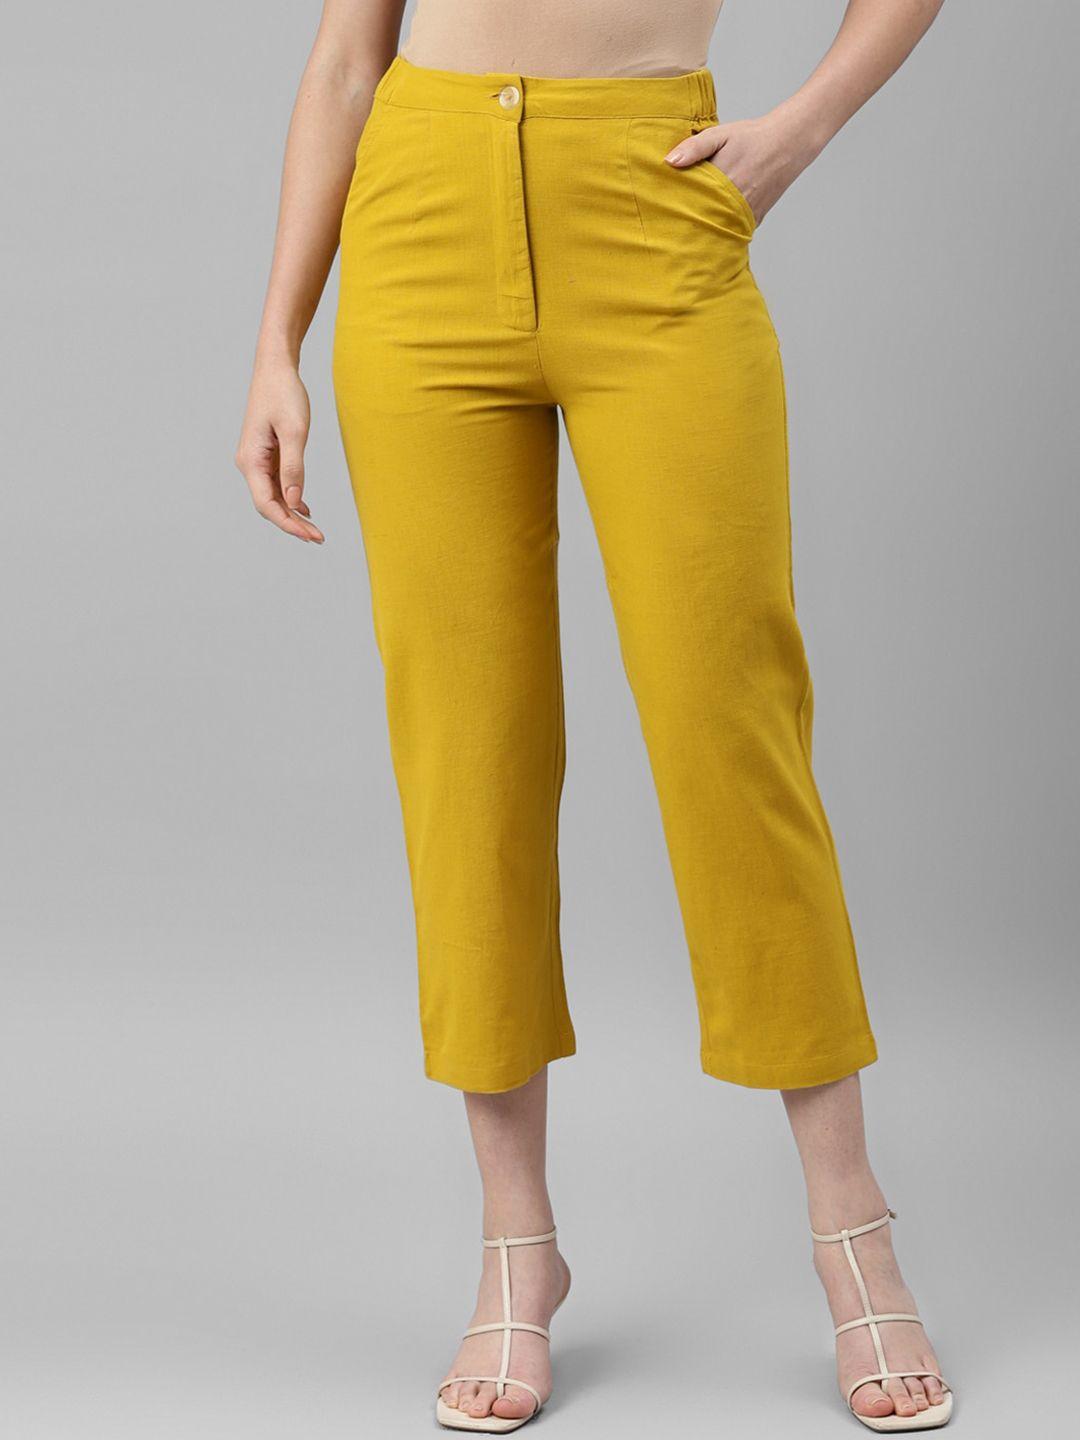 deebaco women mustard yellow pencil slim fit high-rise trousers